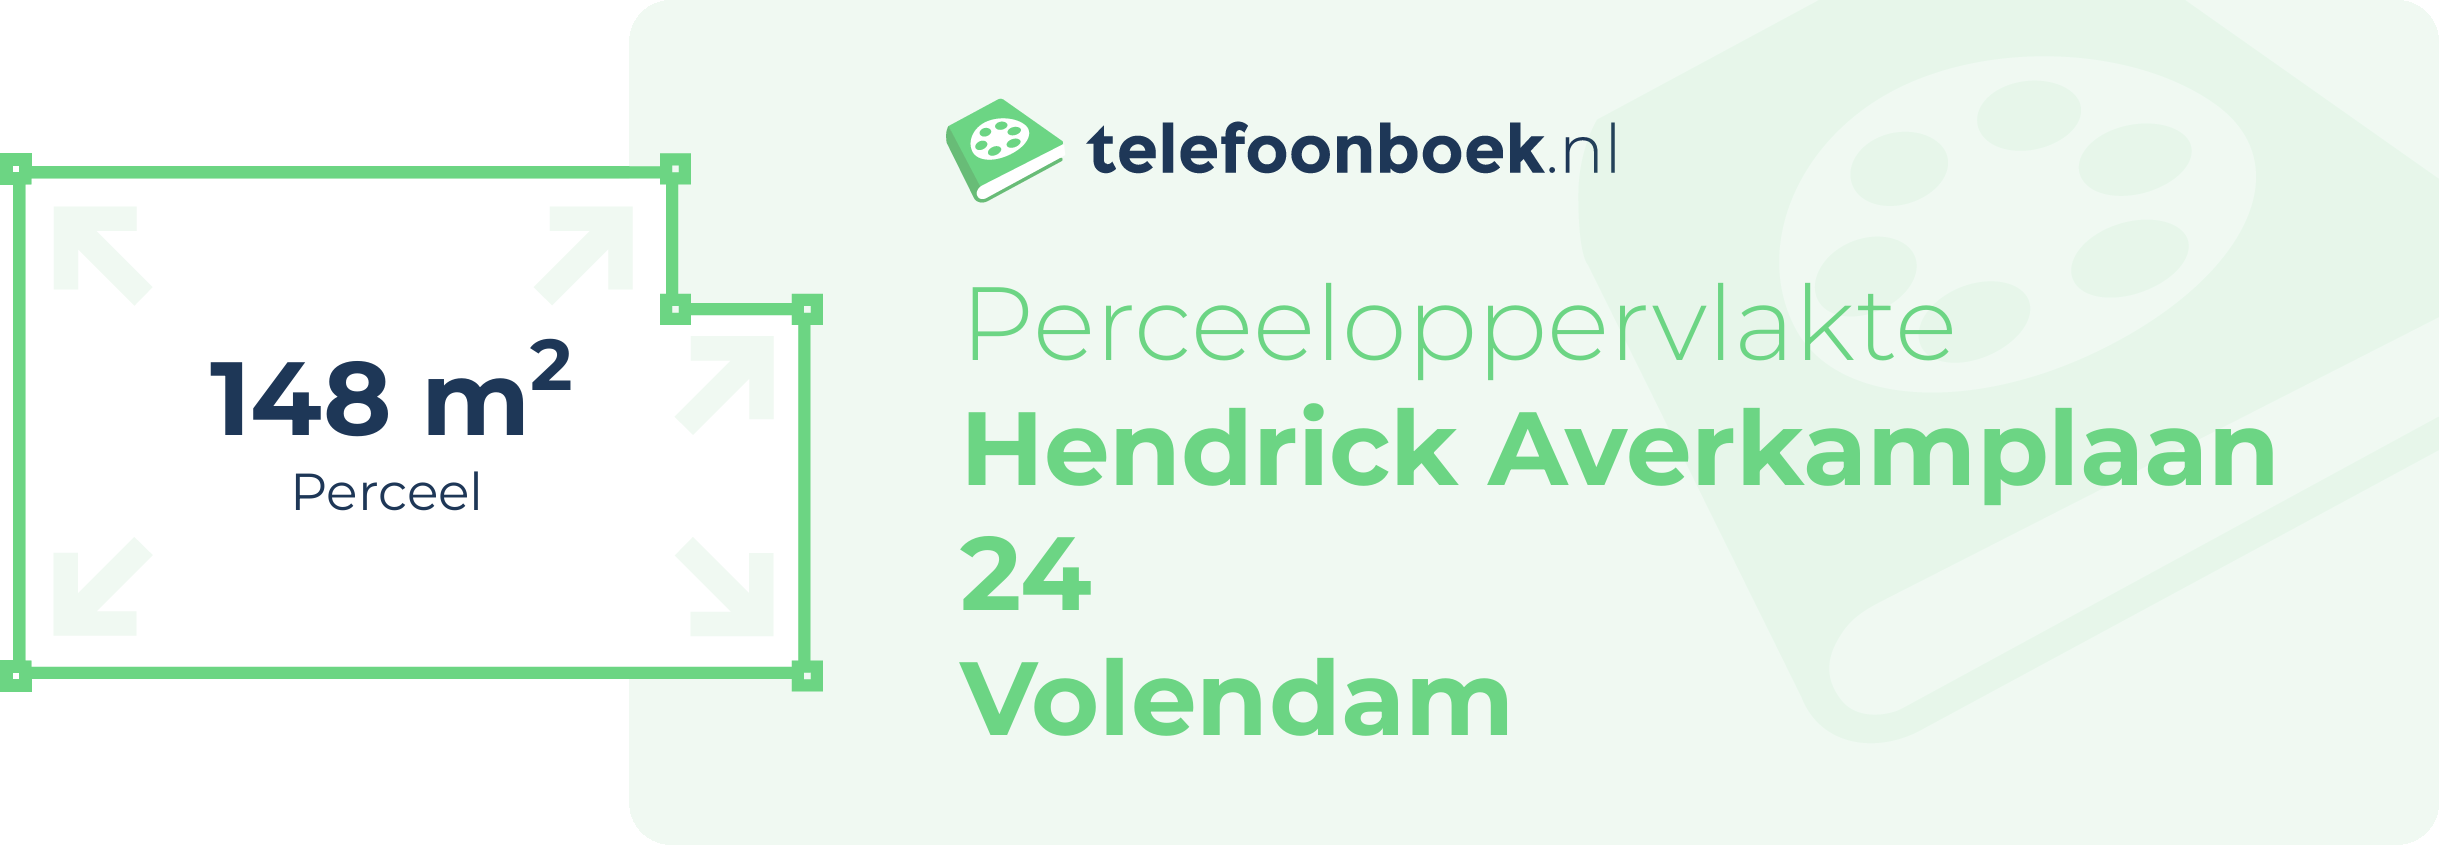 Perceeloppervlakte Hendrick Averkamplaan 24 Volendam